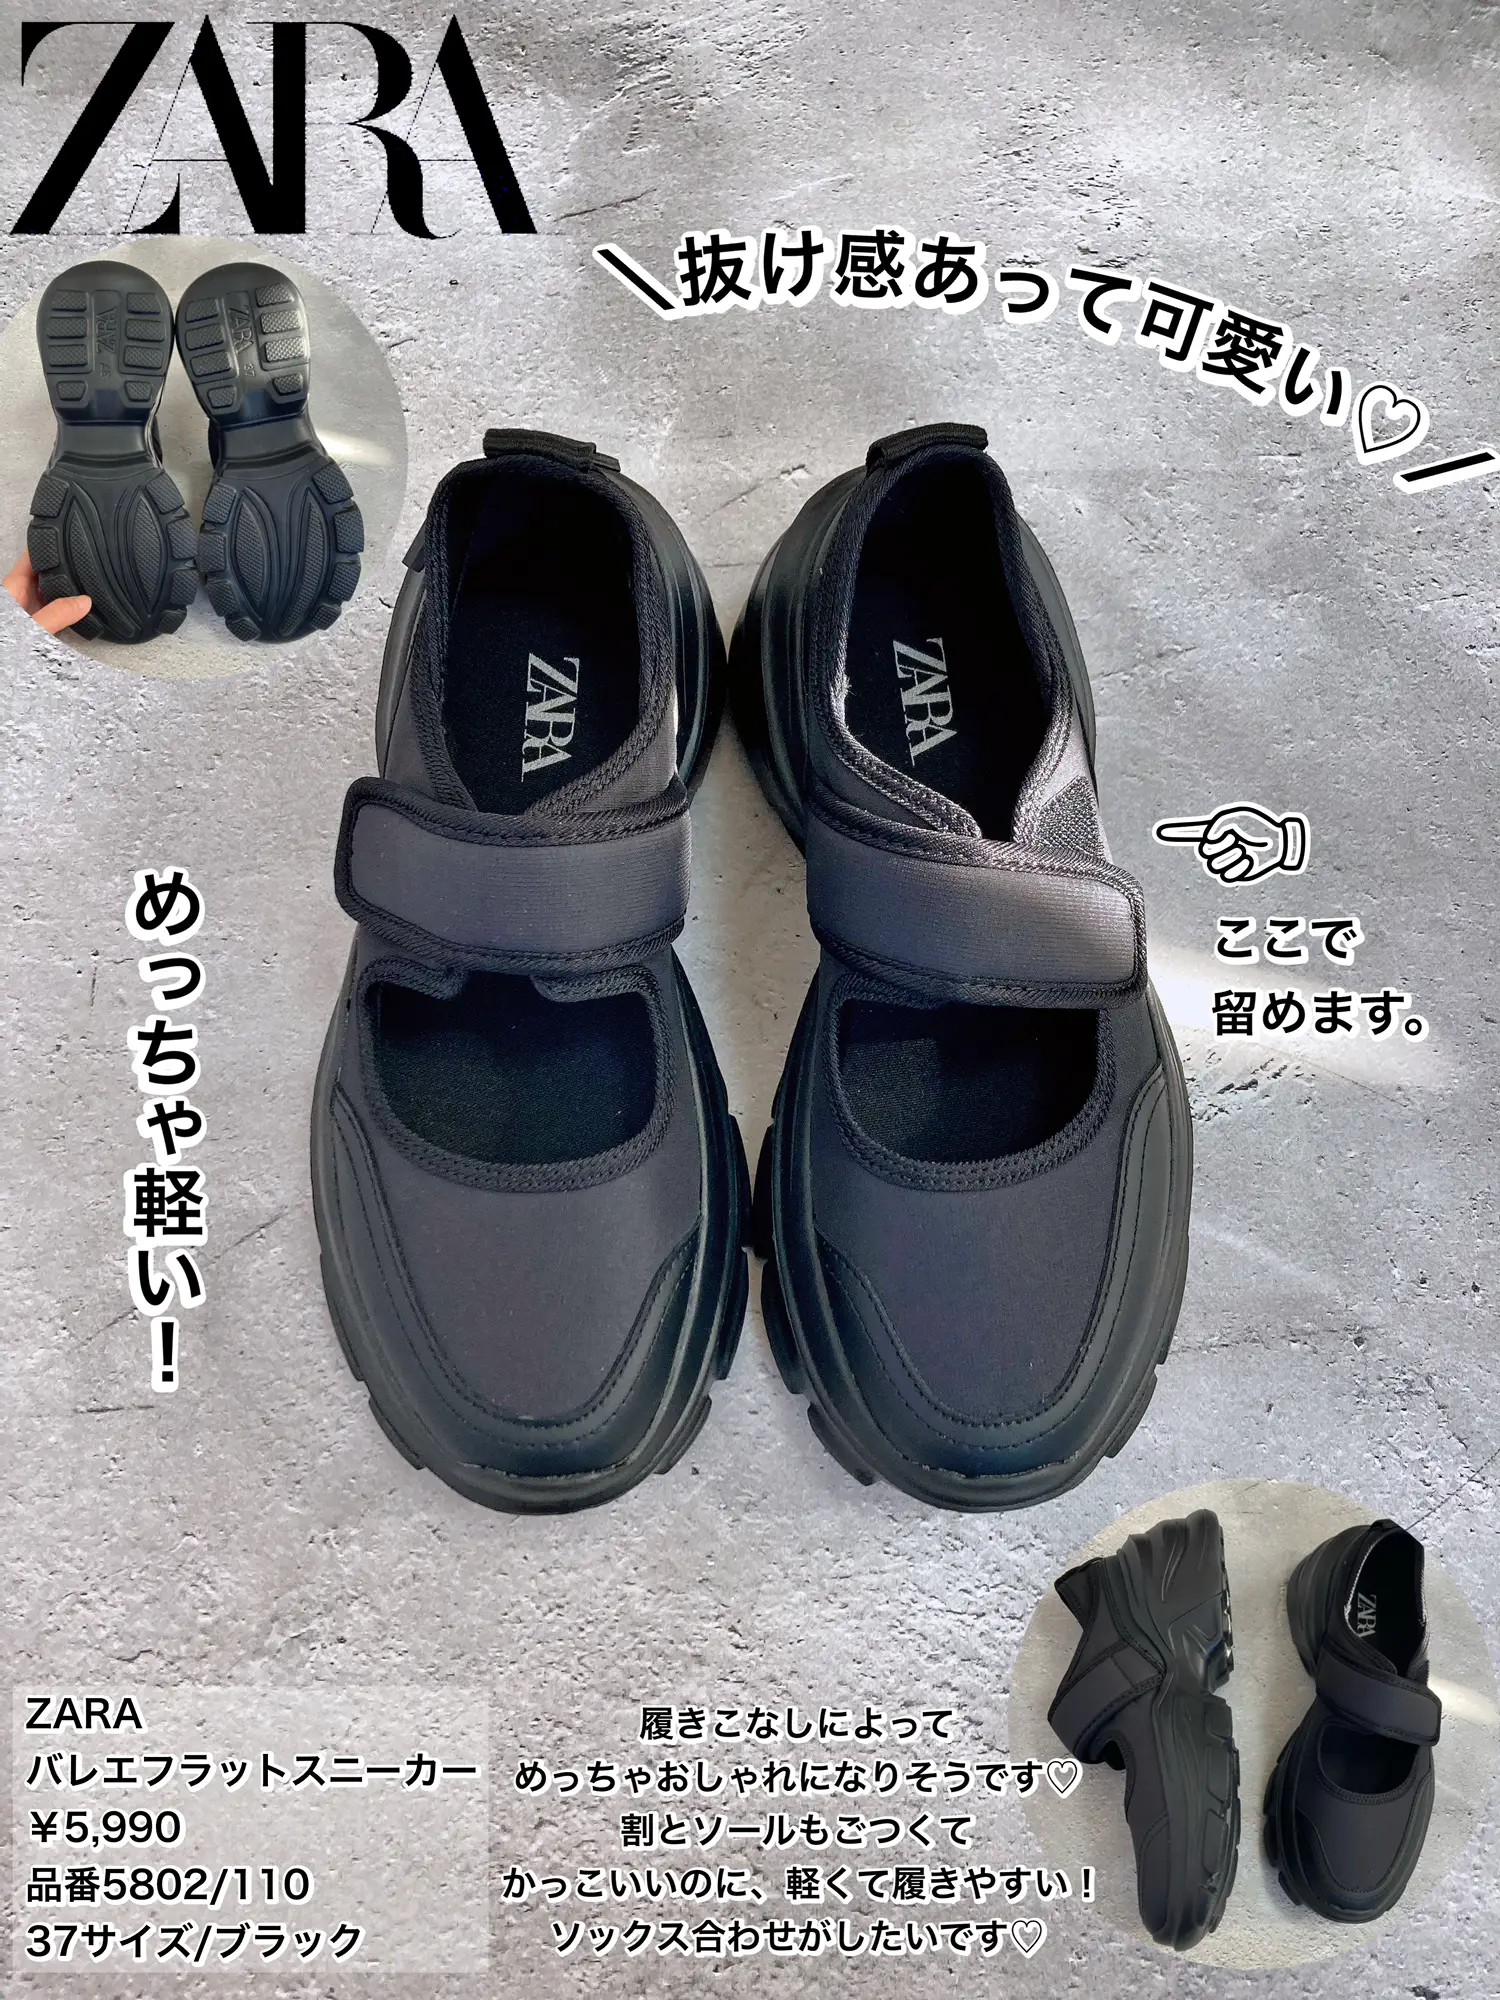 ZARA バレエフラットスニーカー 38 【当店限定販売】 - 靴